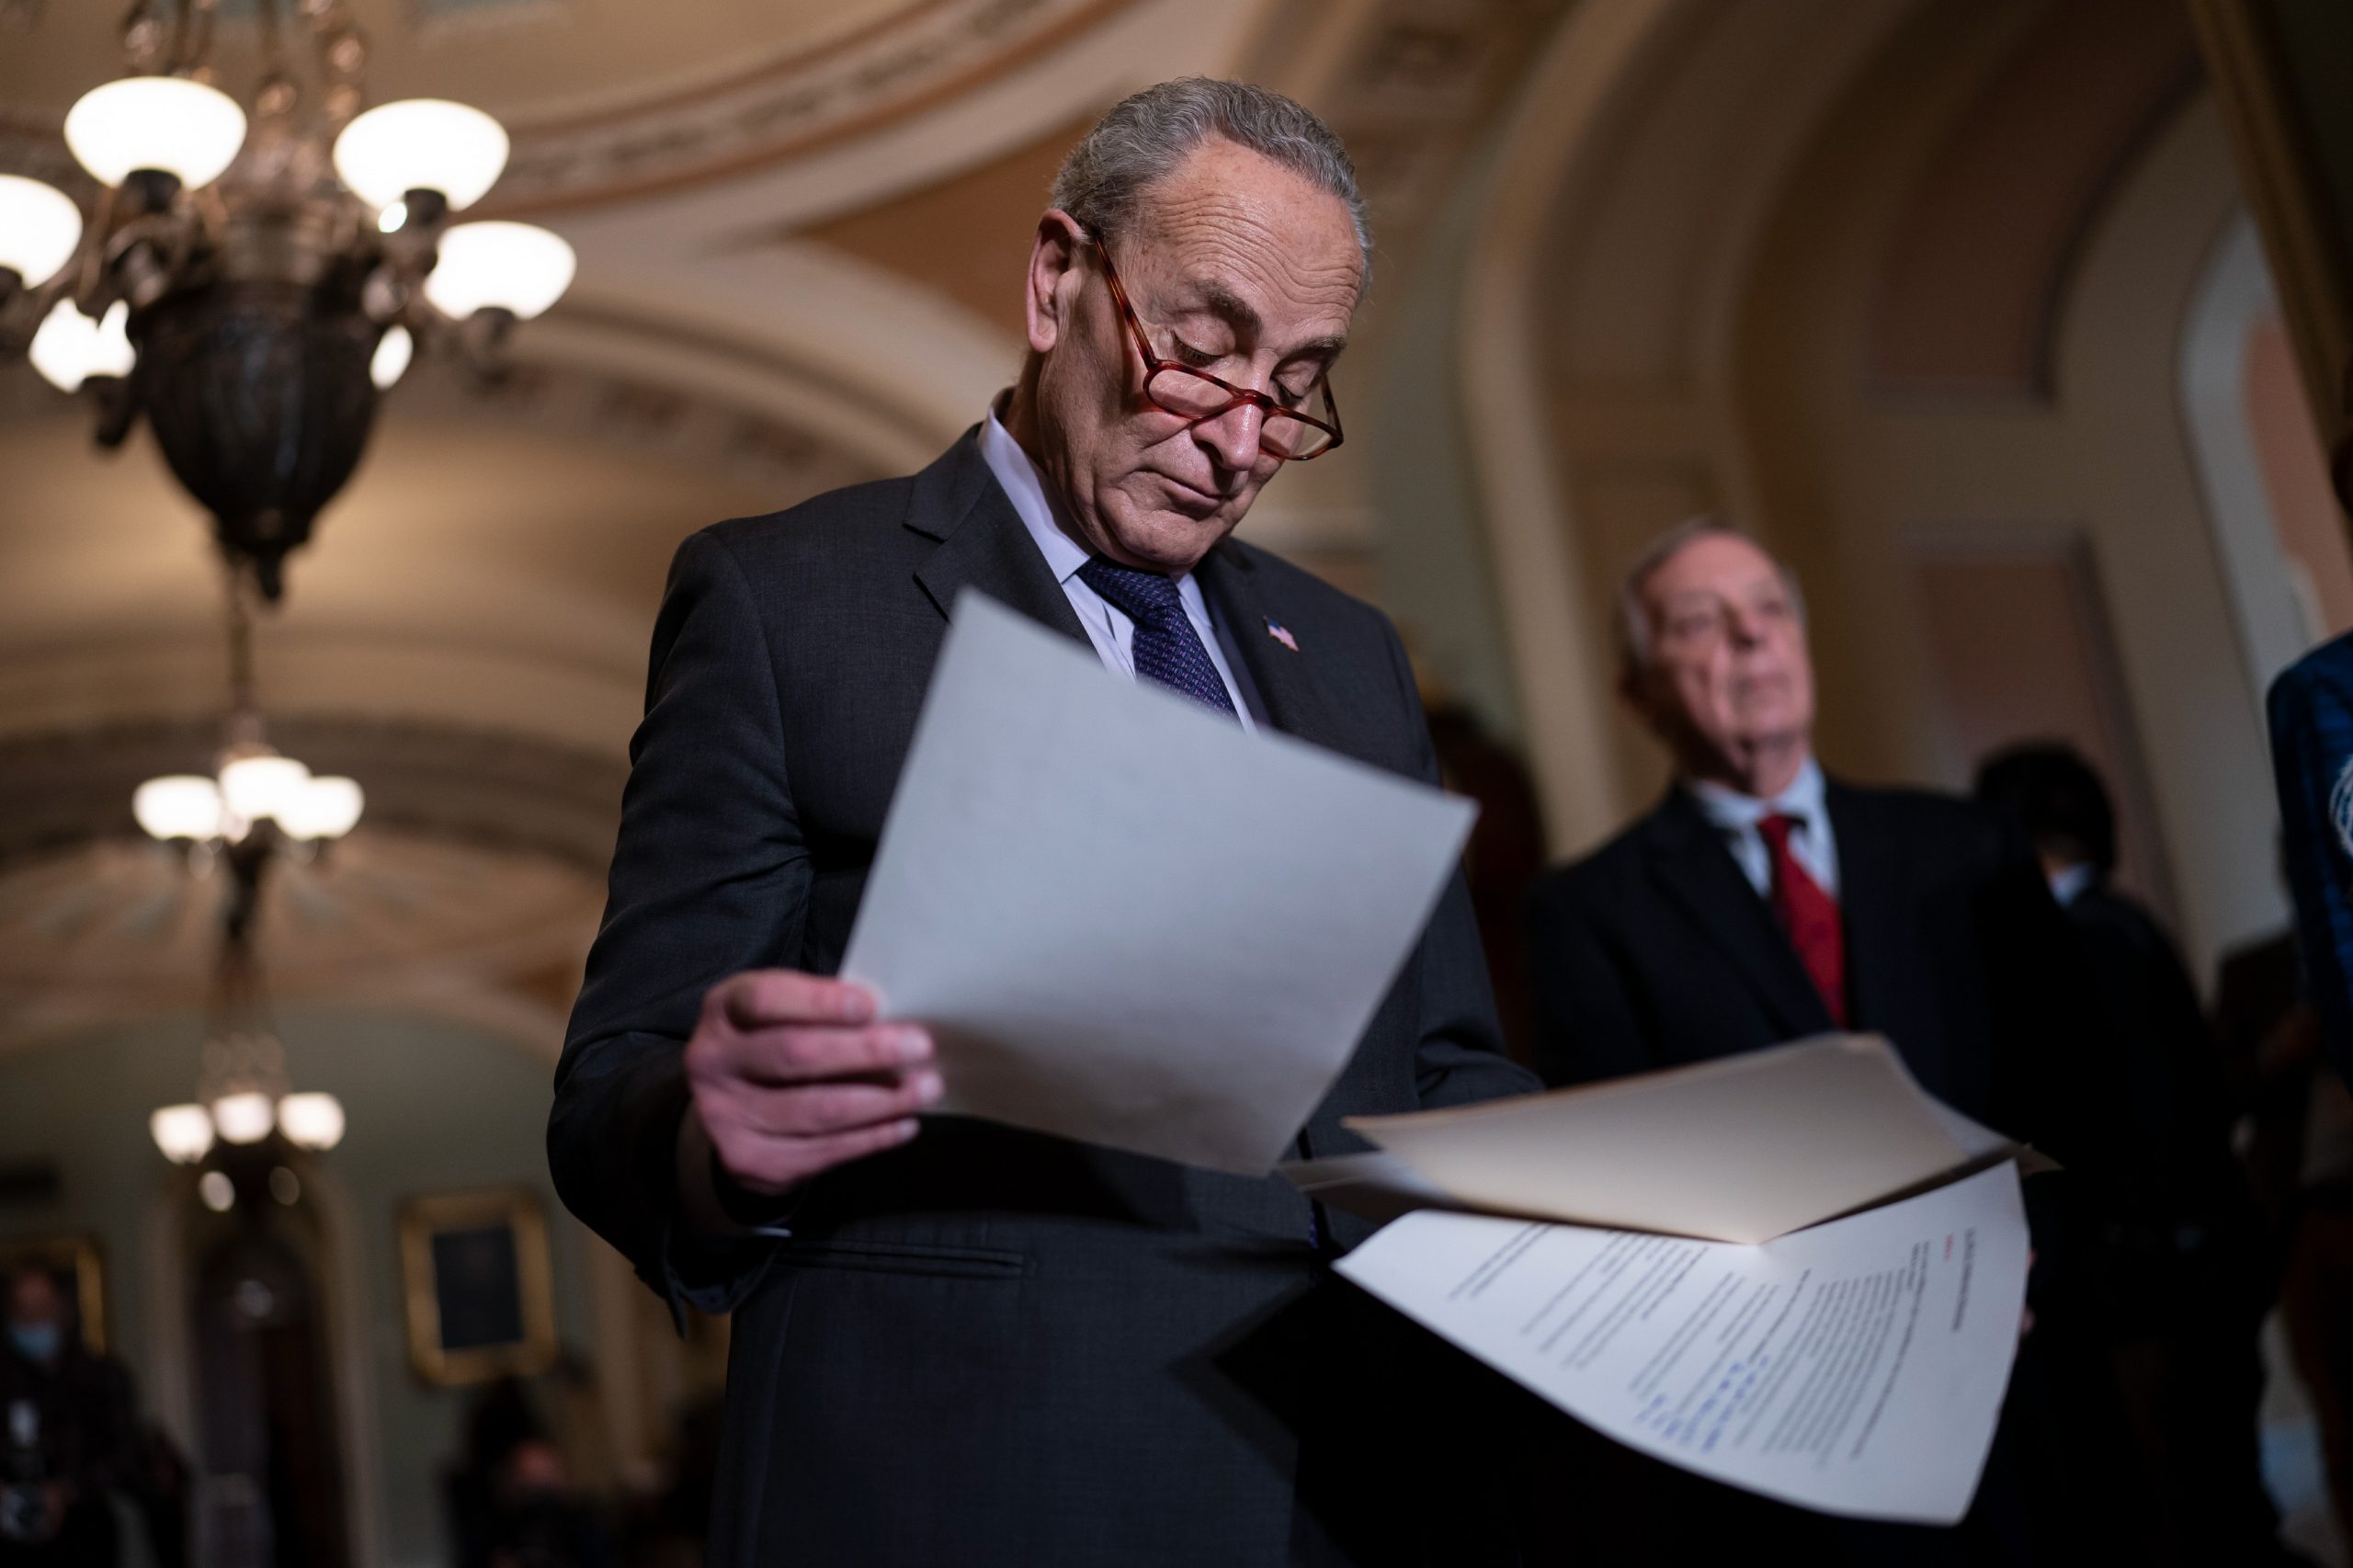 Senate sinks deeper into quagmire of dysfunction